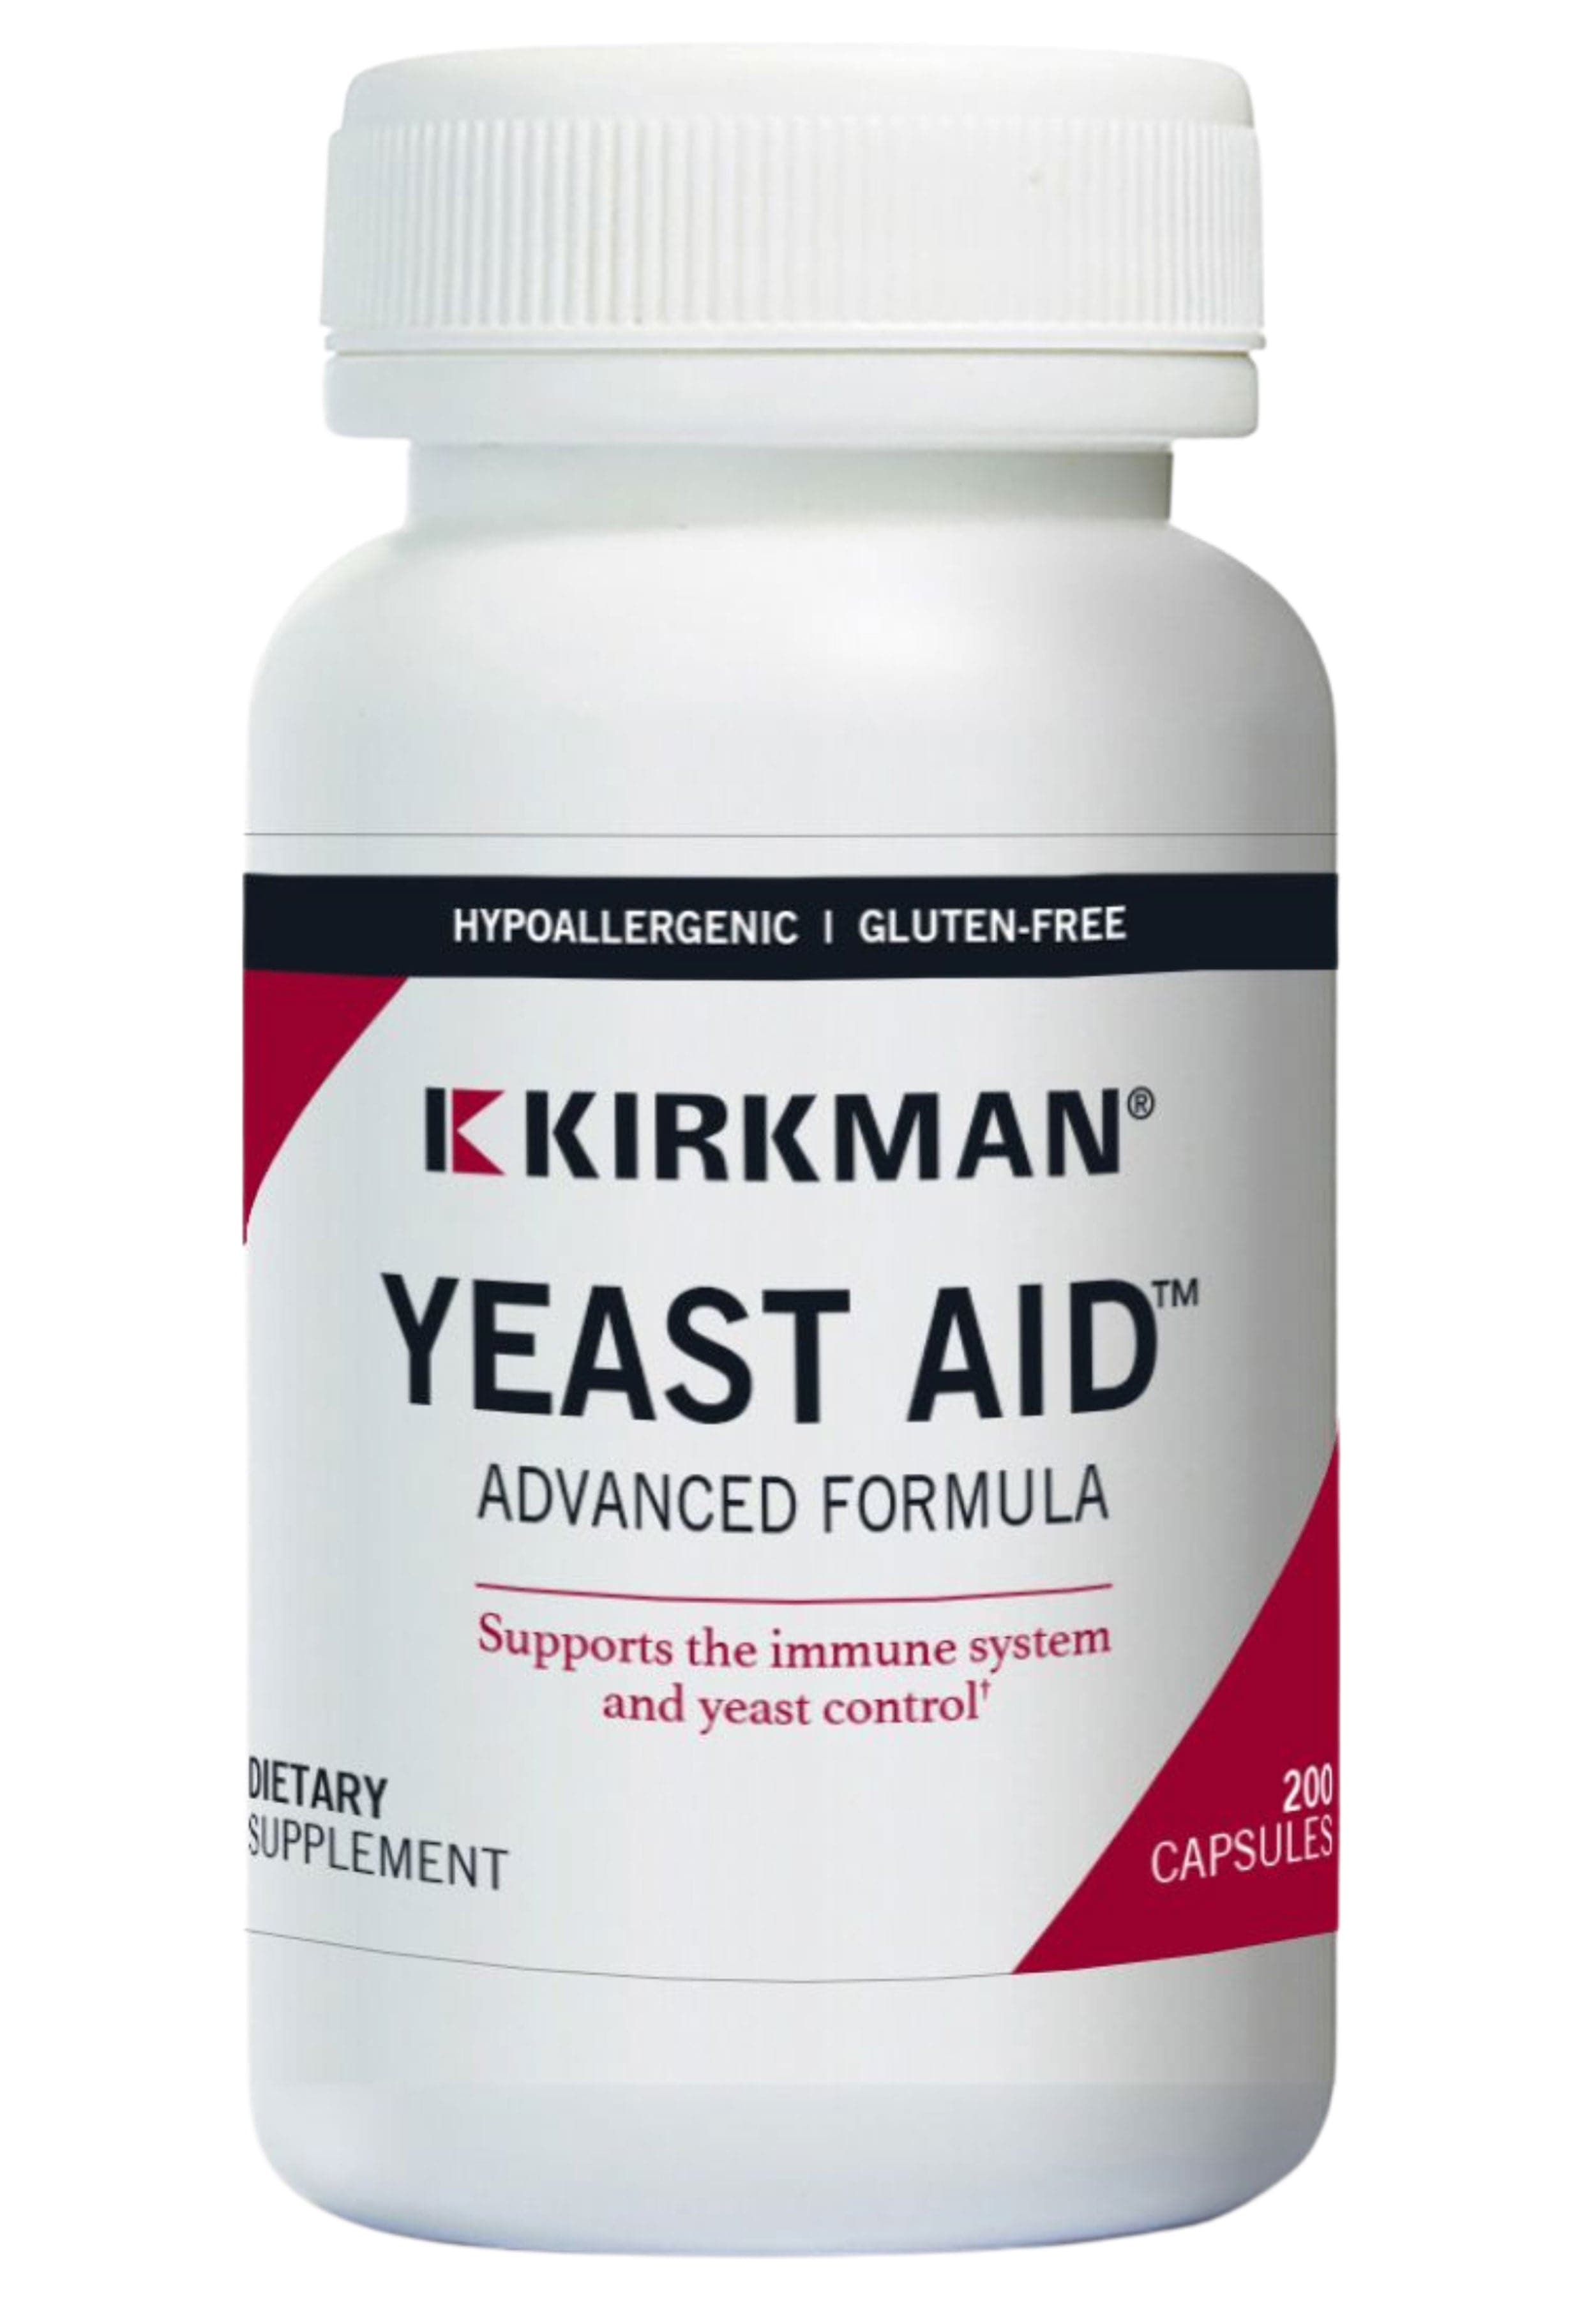 Kirkman Yeast-Aid Advanced Formula Capsules